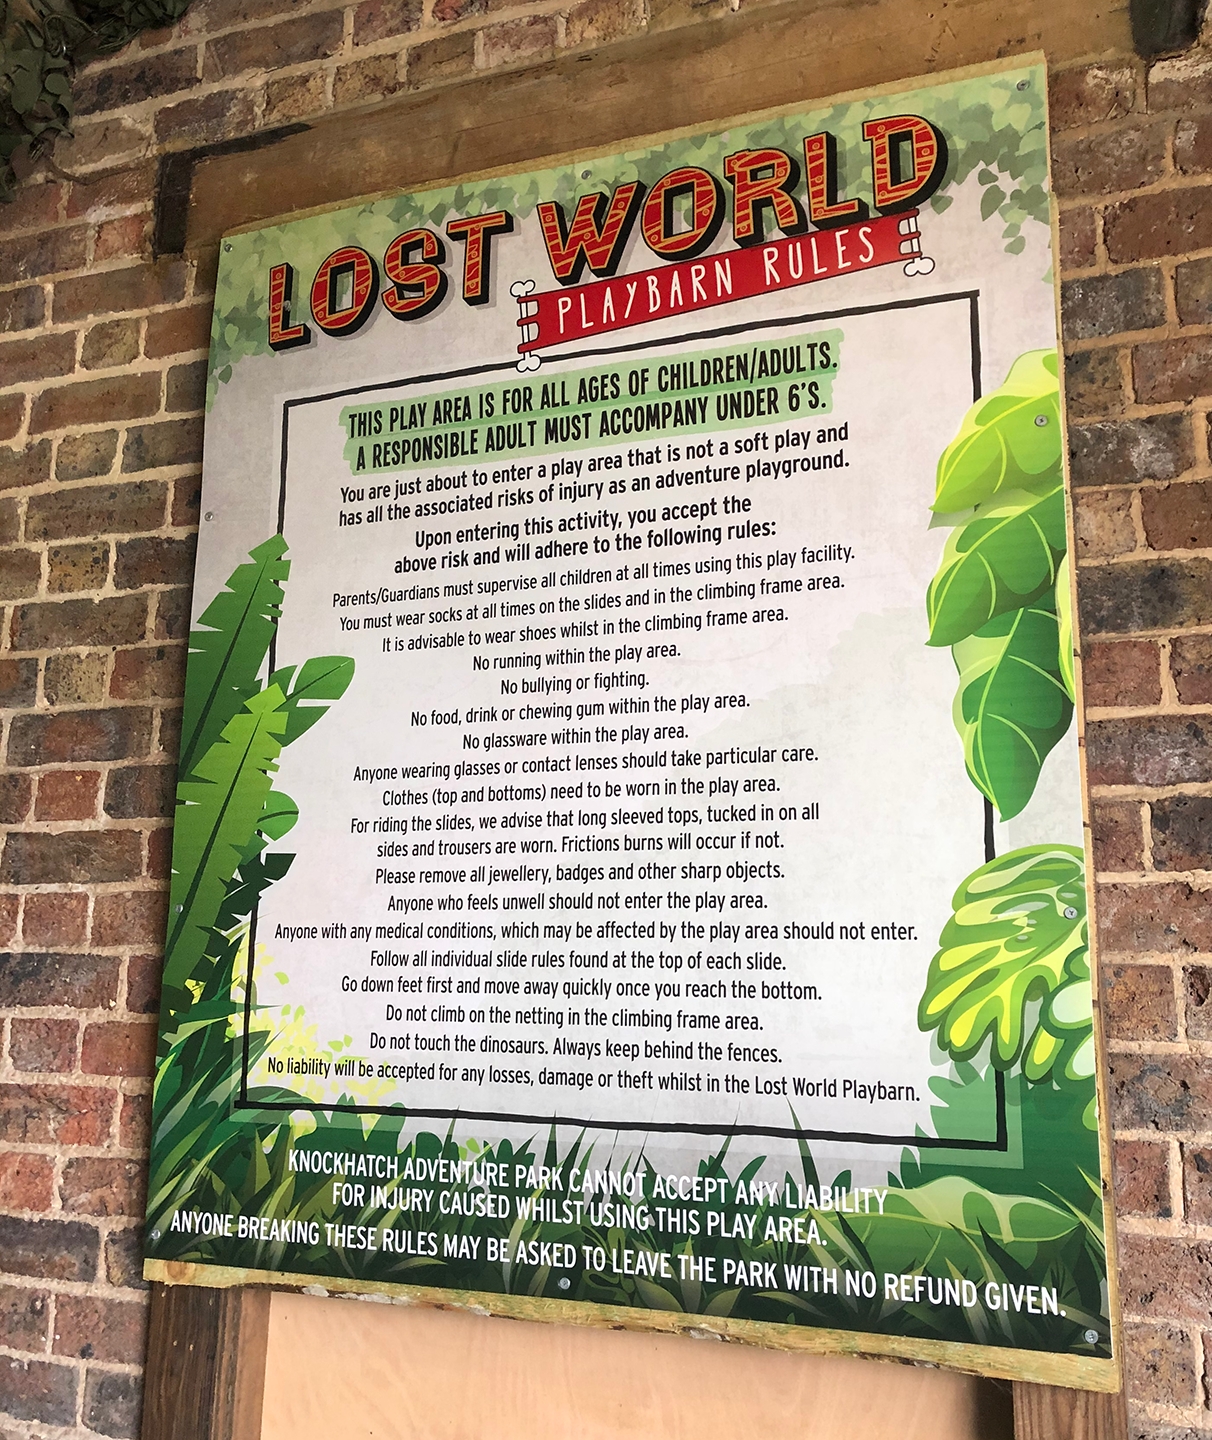 lost world playbarn, knockhatch adventure park